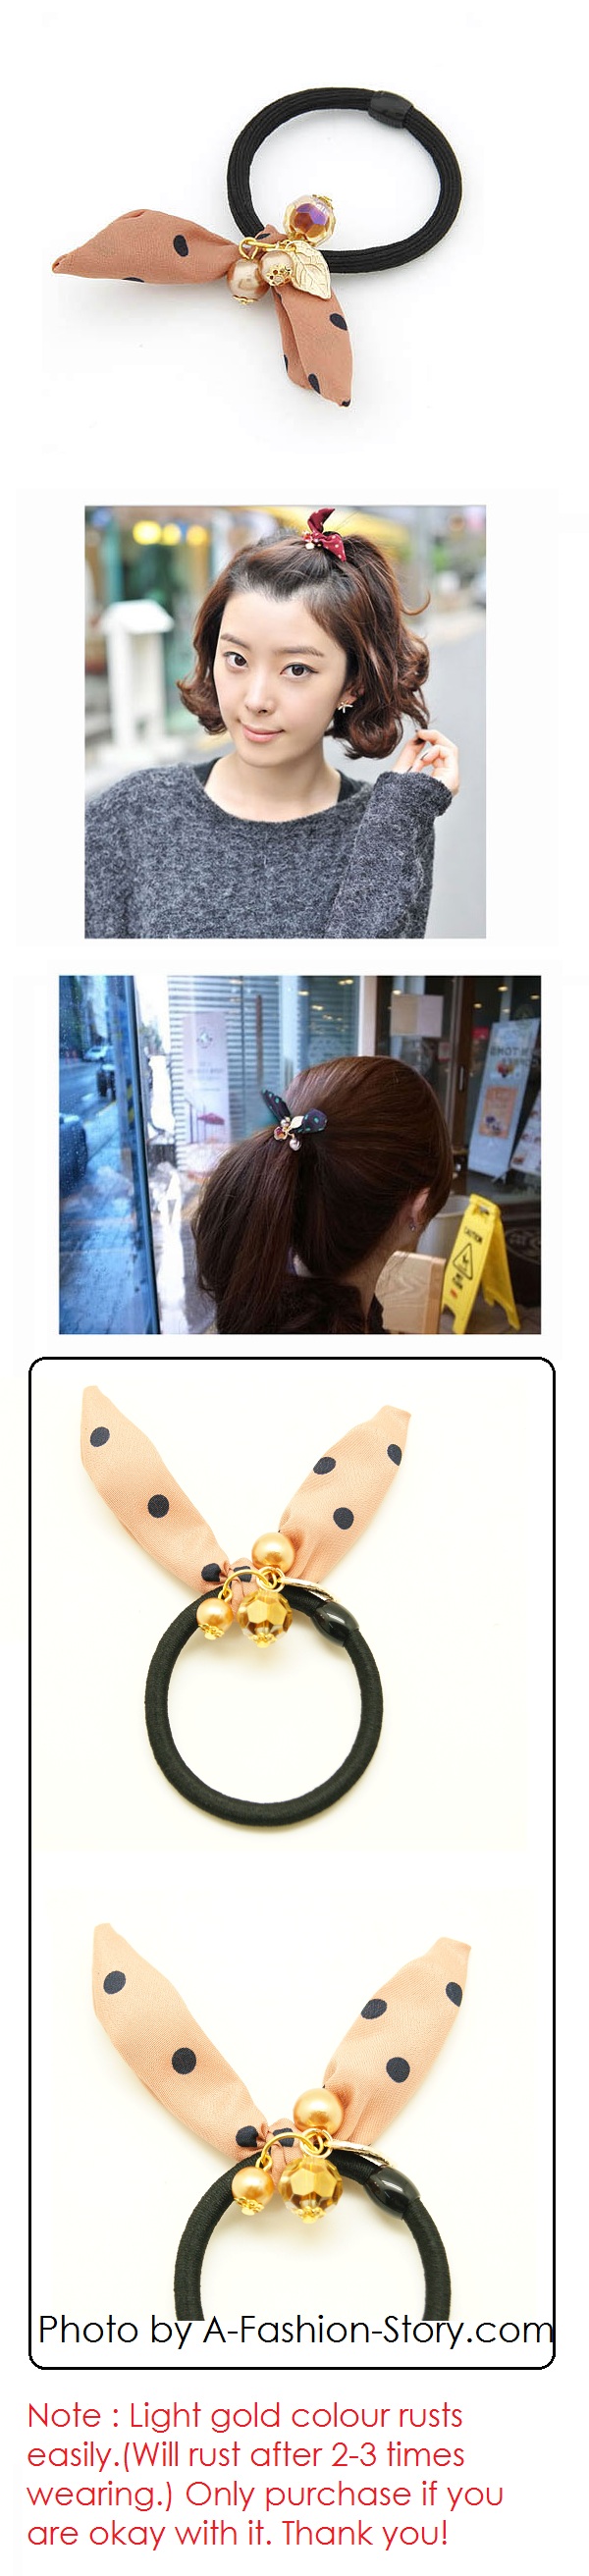 C10102454 Polka dots rabbit ears korean hair accessories online